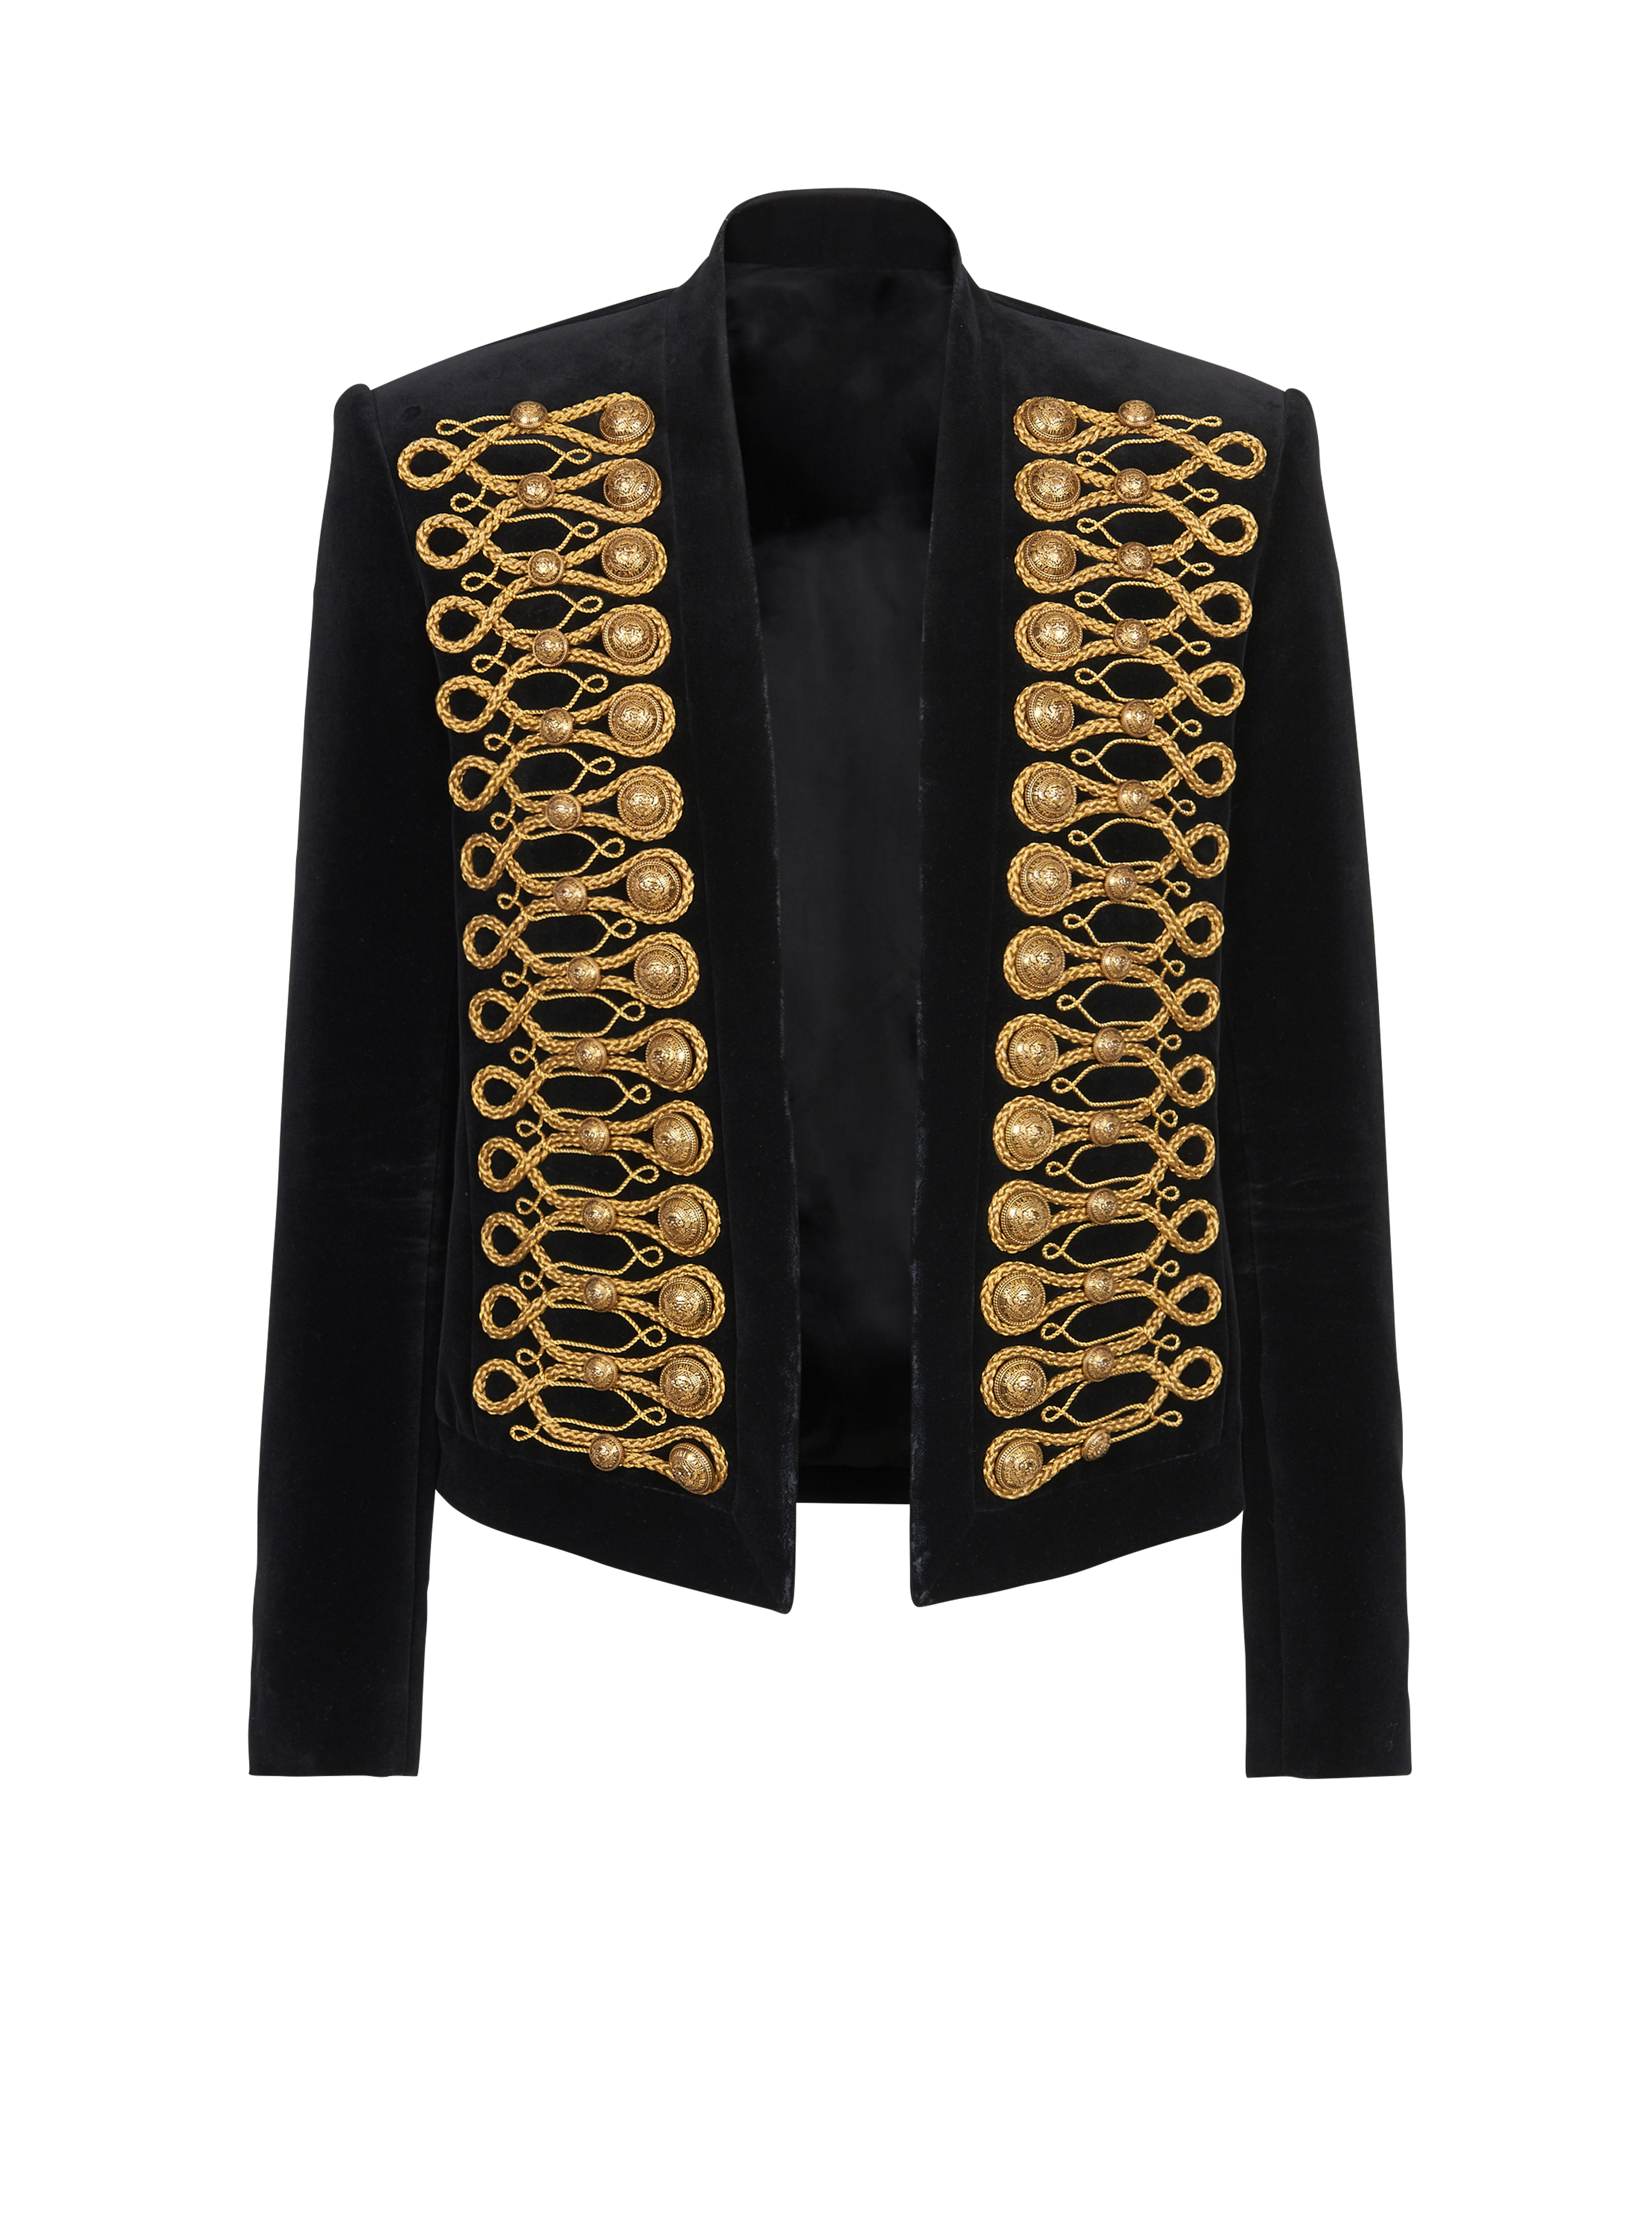 Velvet Brandenburg spencer jacket with golden embroidery, gold